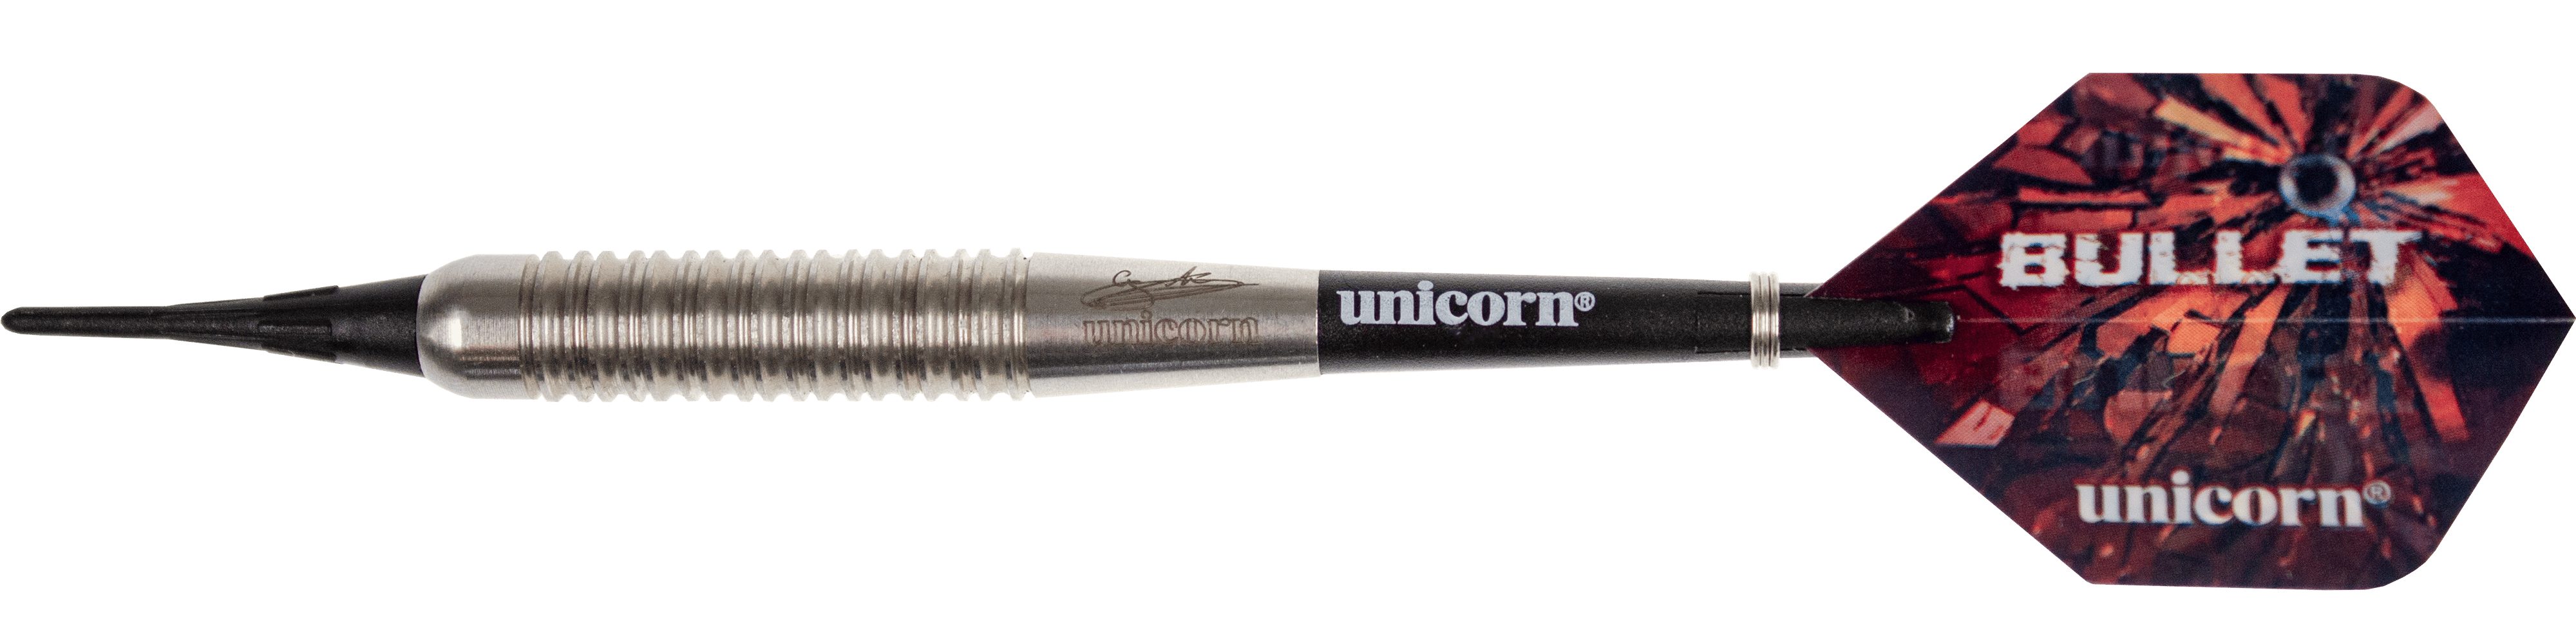 Miękkie rzutki Unicorn Bullet Gary Anderson